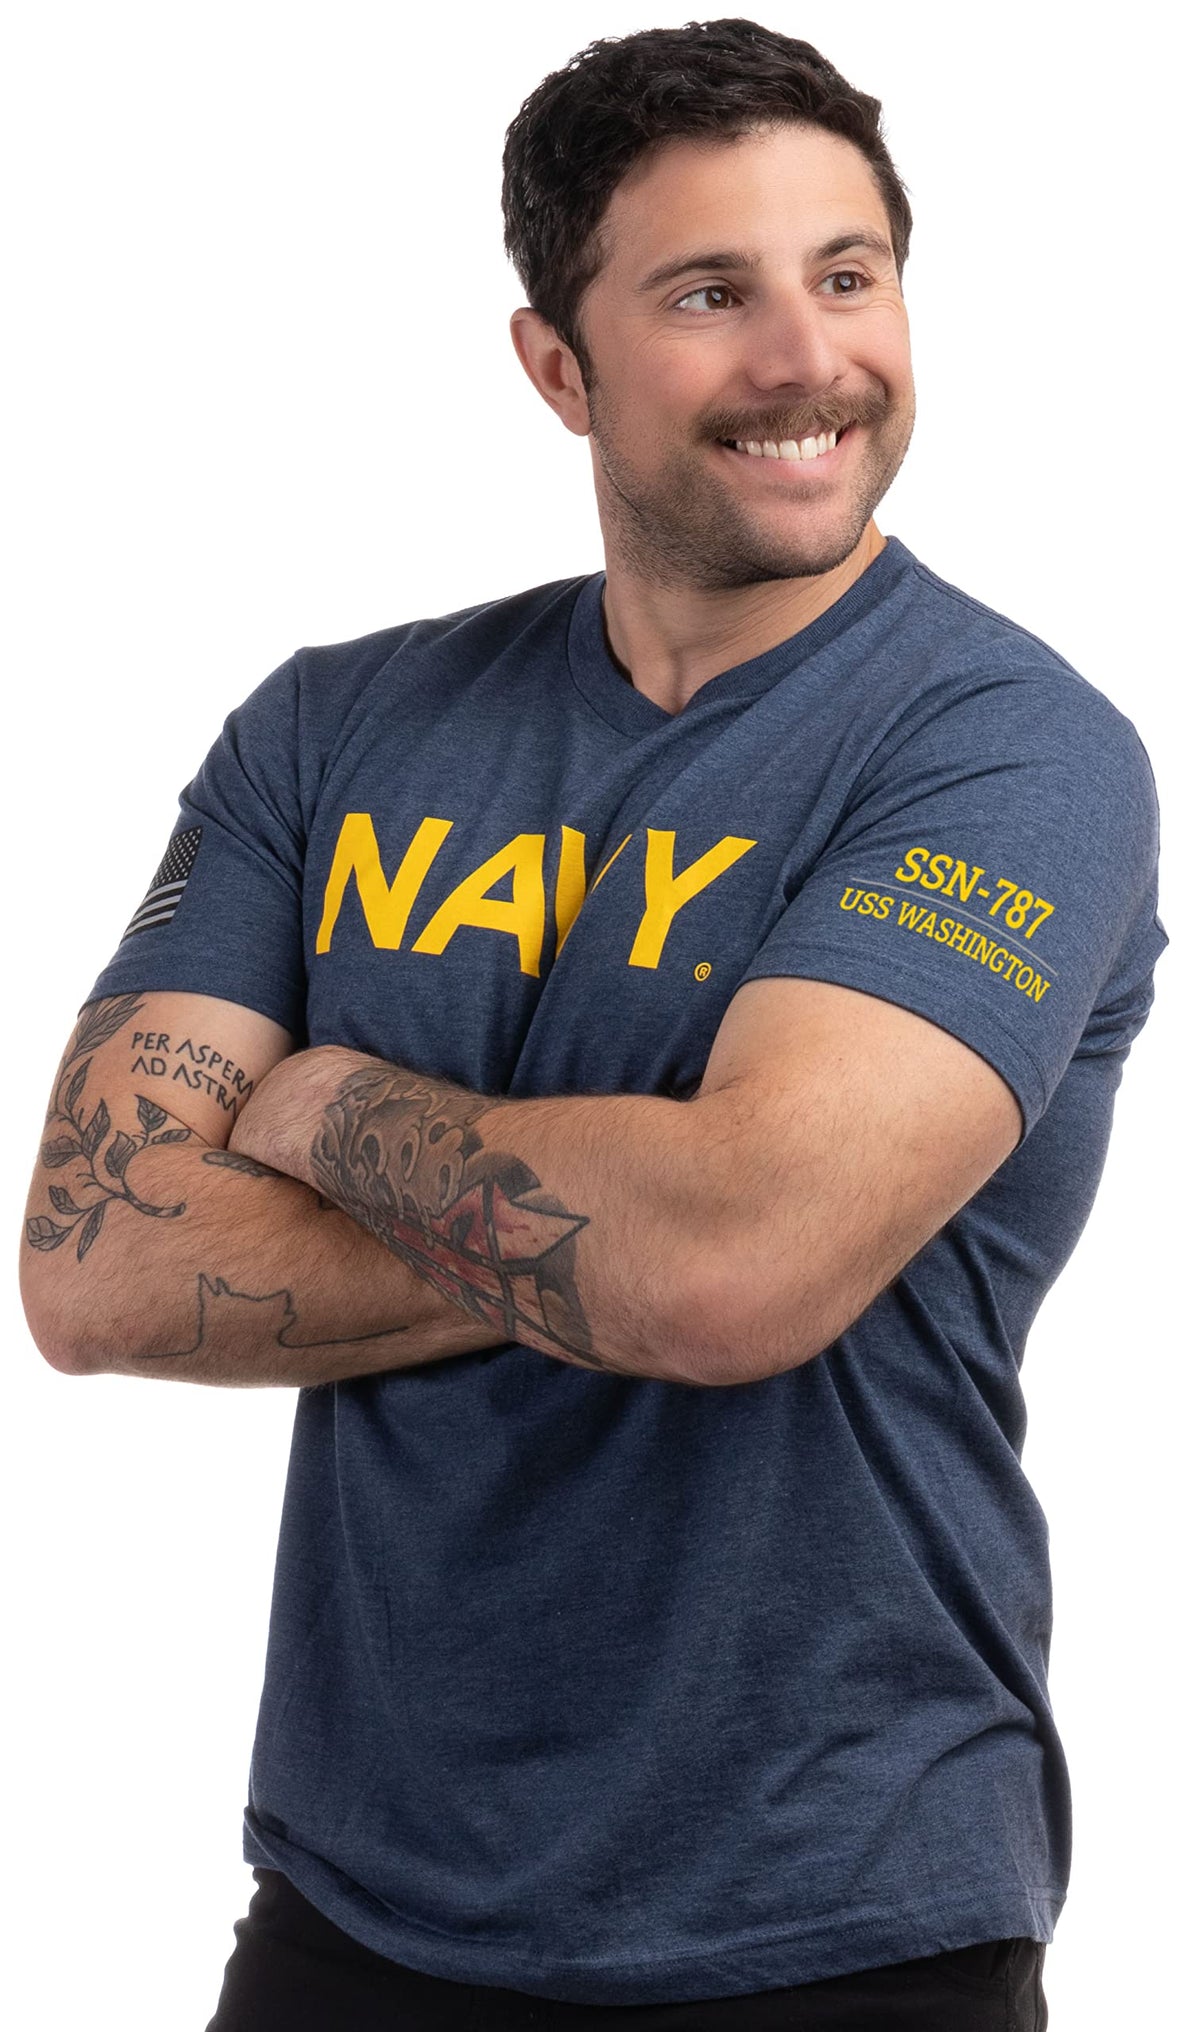 USS Washington, SSN-787 | U.S. Navy Sailor Veteran USN United States Naval T-shirt for Men Women